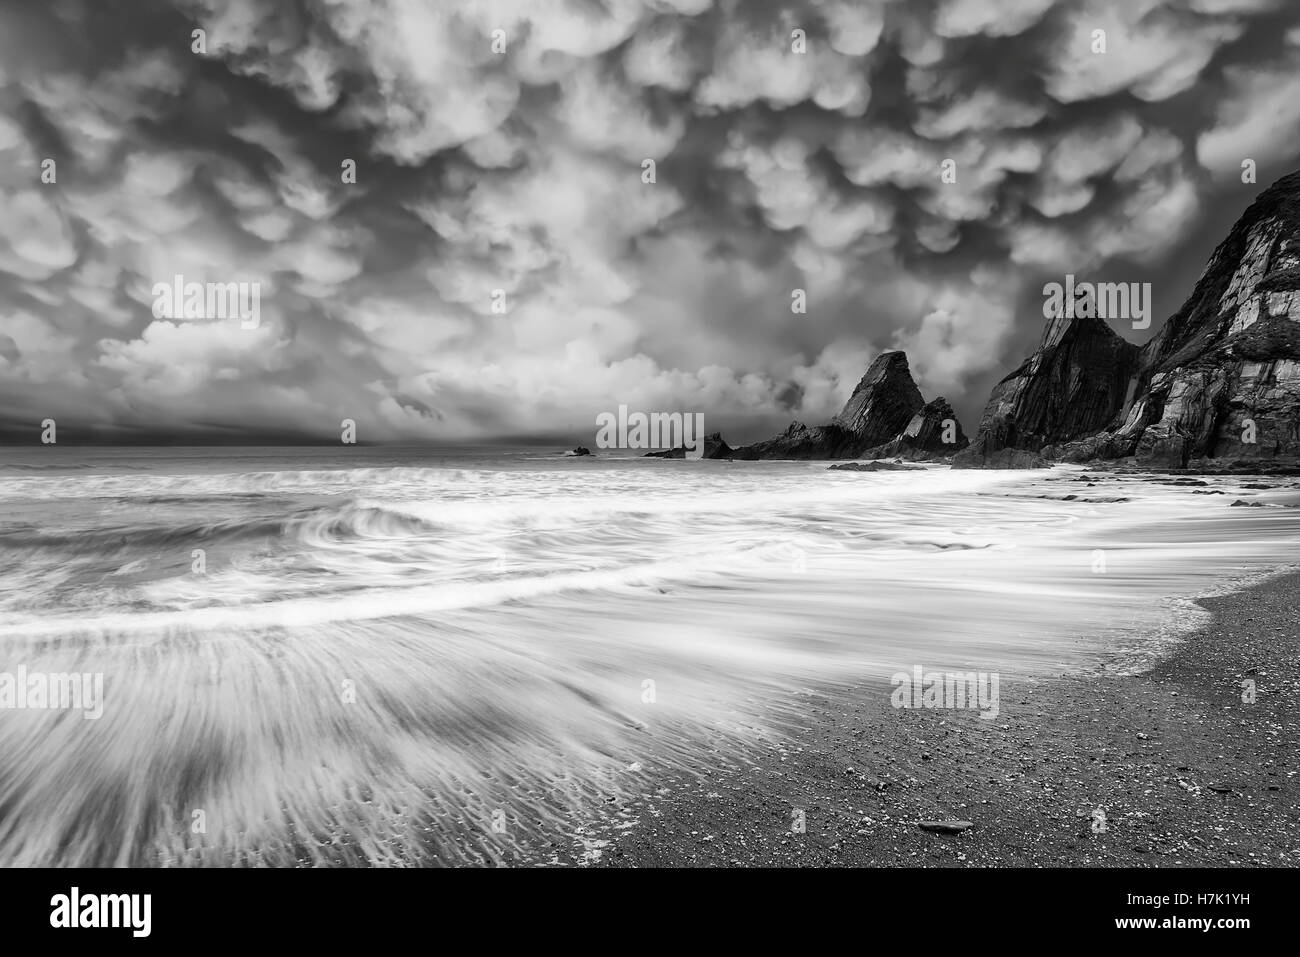 Beuatiful mammatus storm cloud formations over coastal landscape Stock Photo